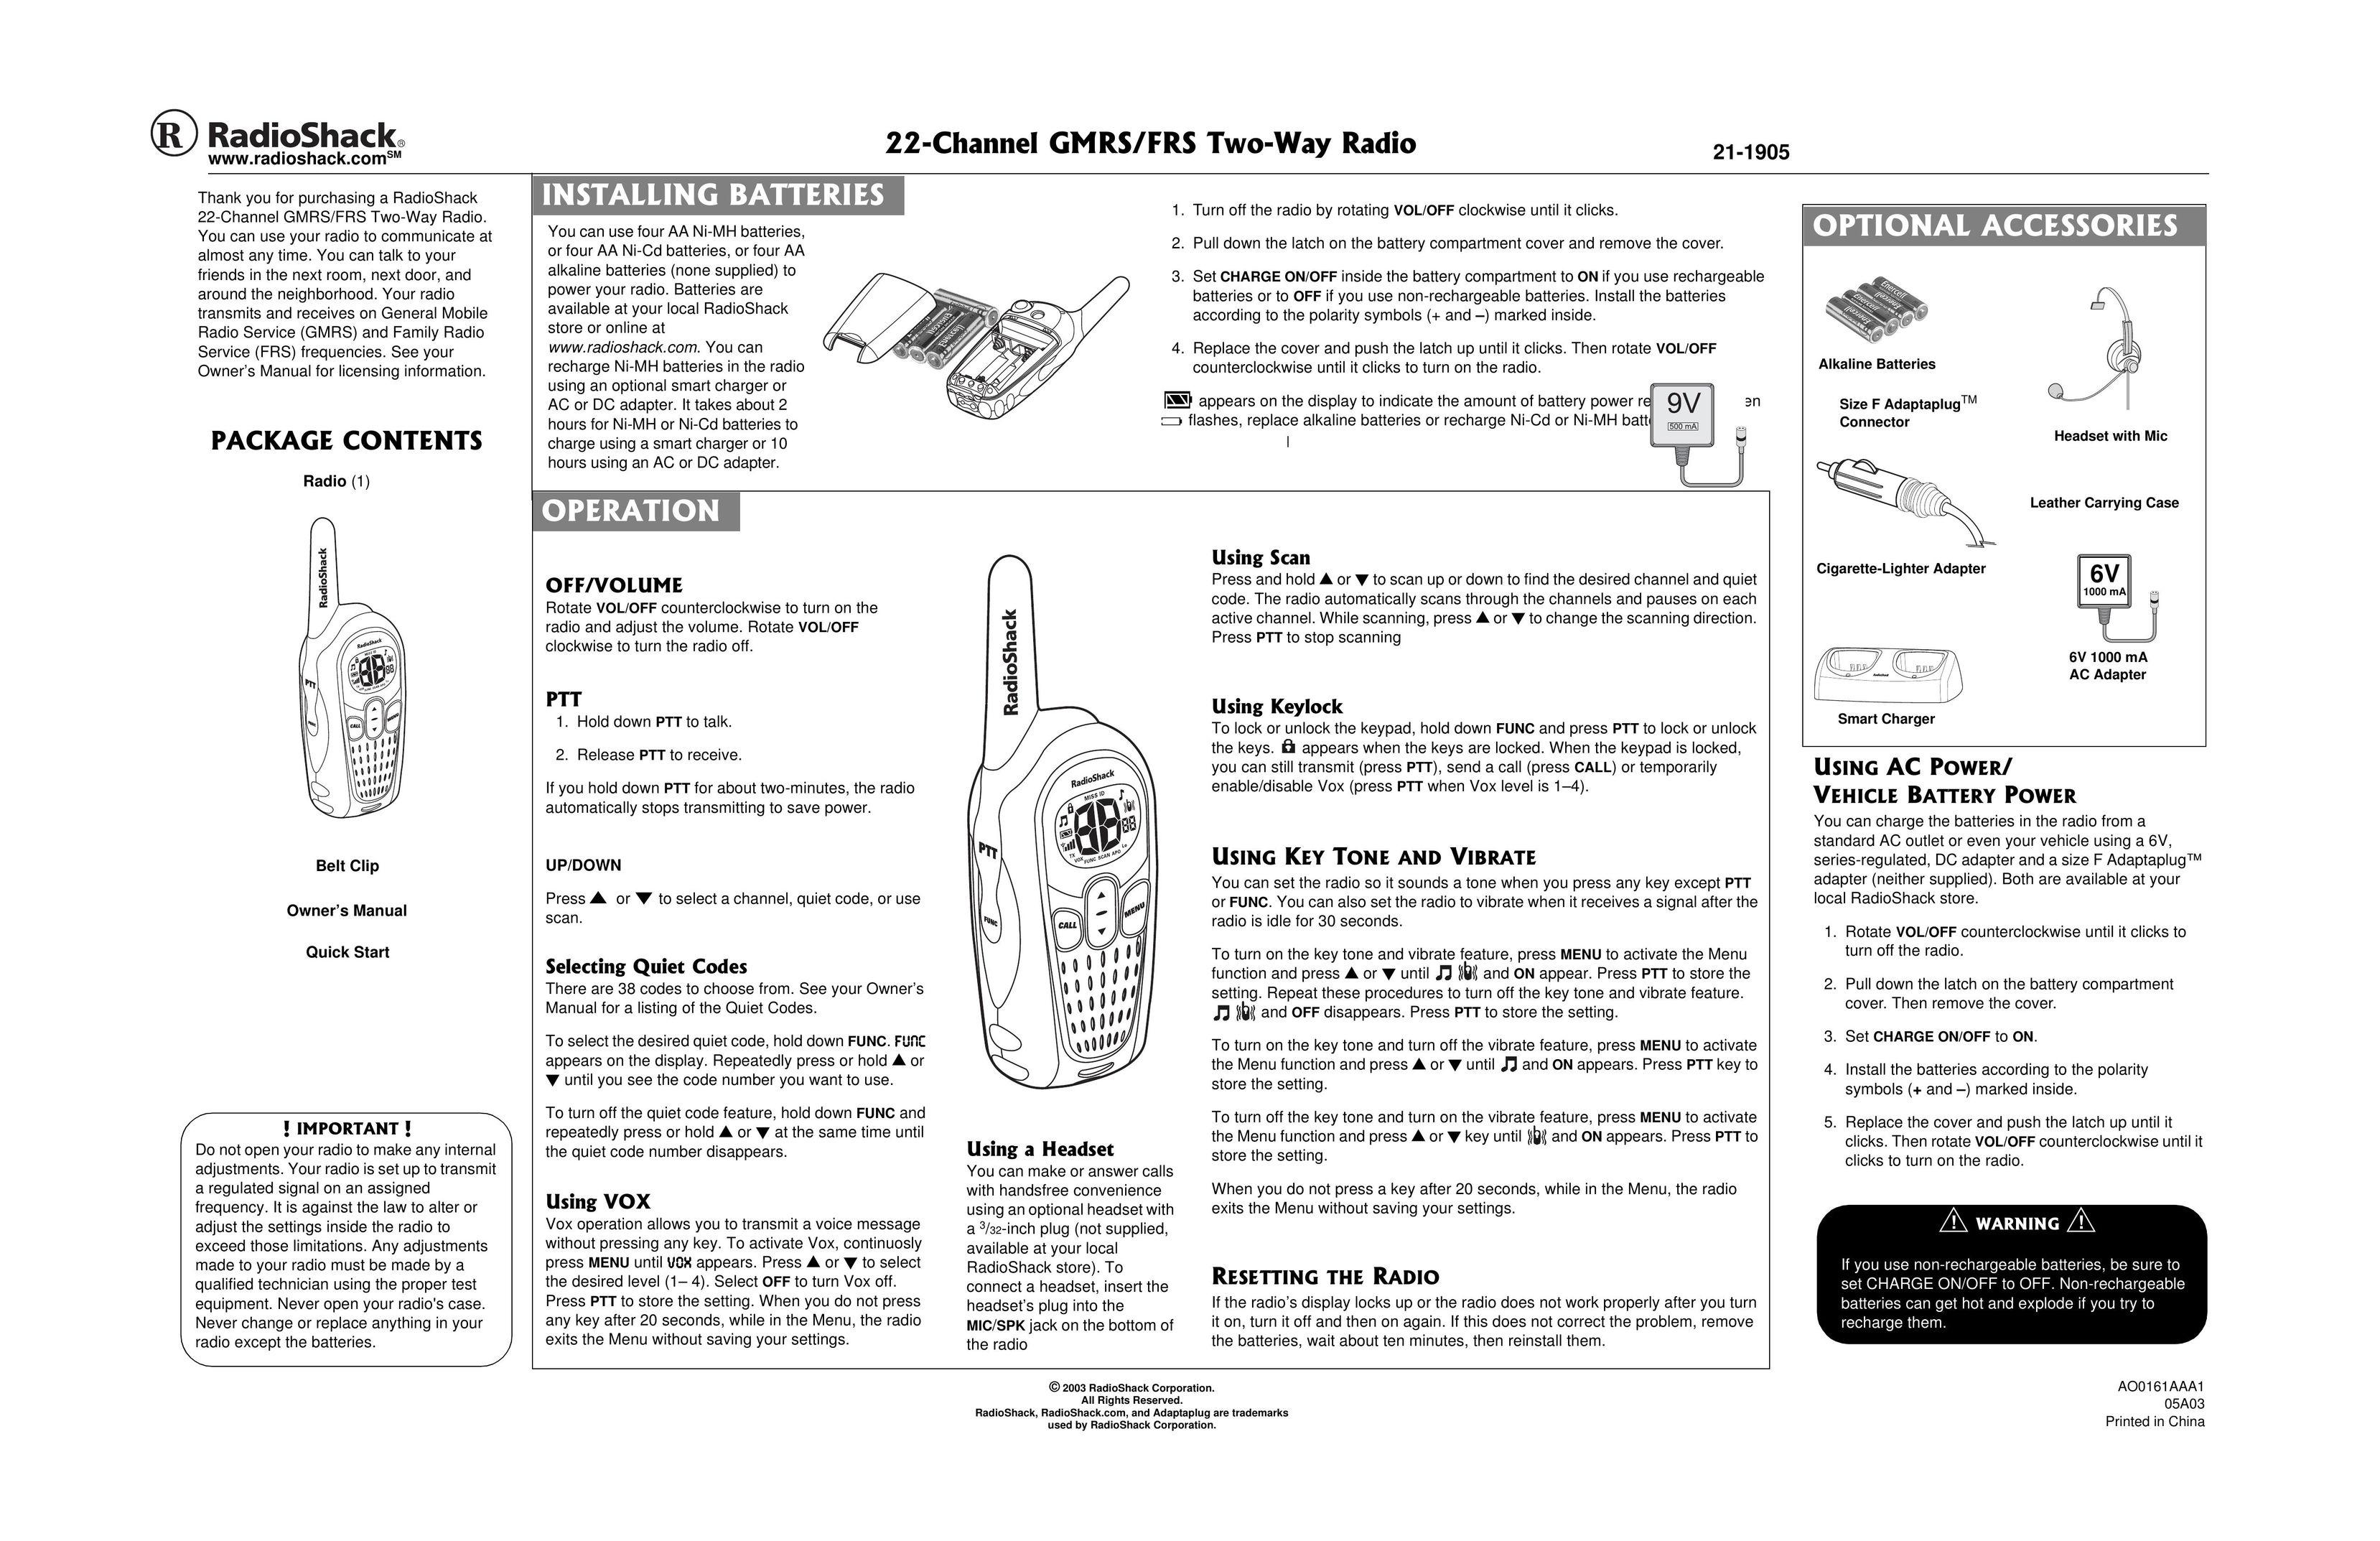 Radio Shack 05A03 Two-Way Radio User Manual